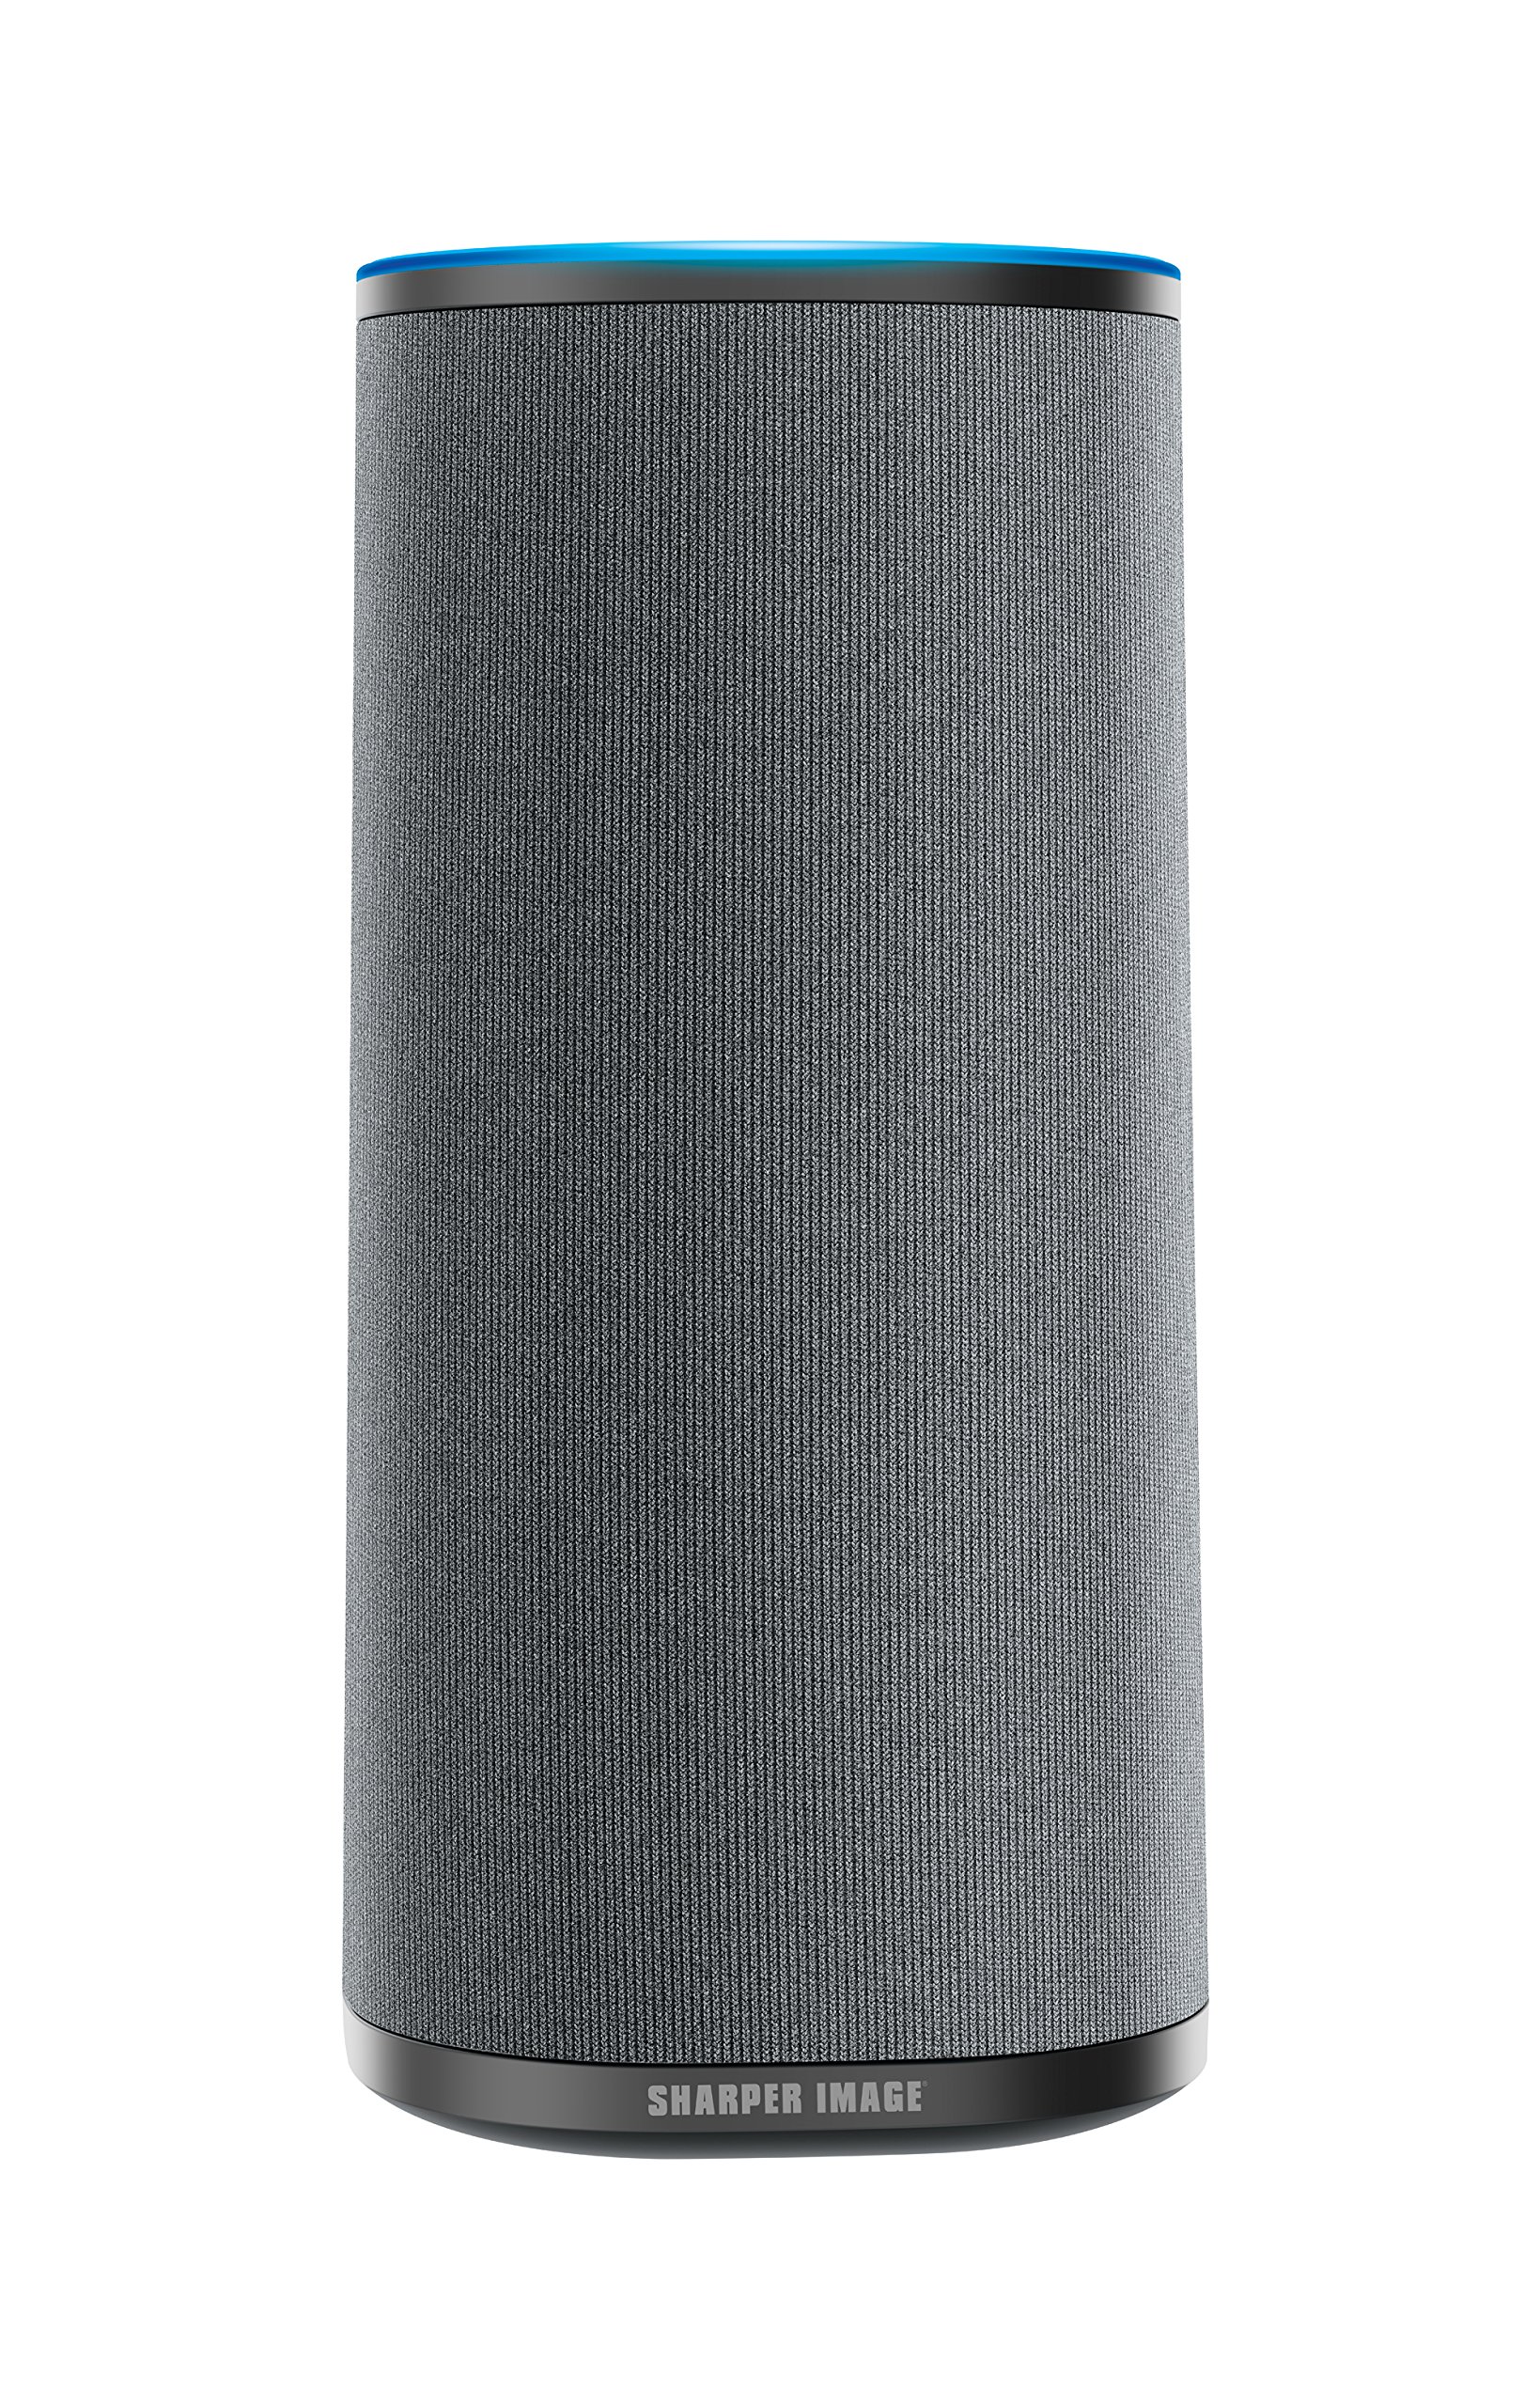 sharper image wifi tower speaker with amazon alexa